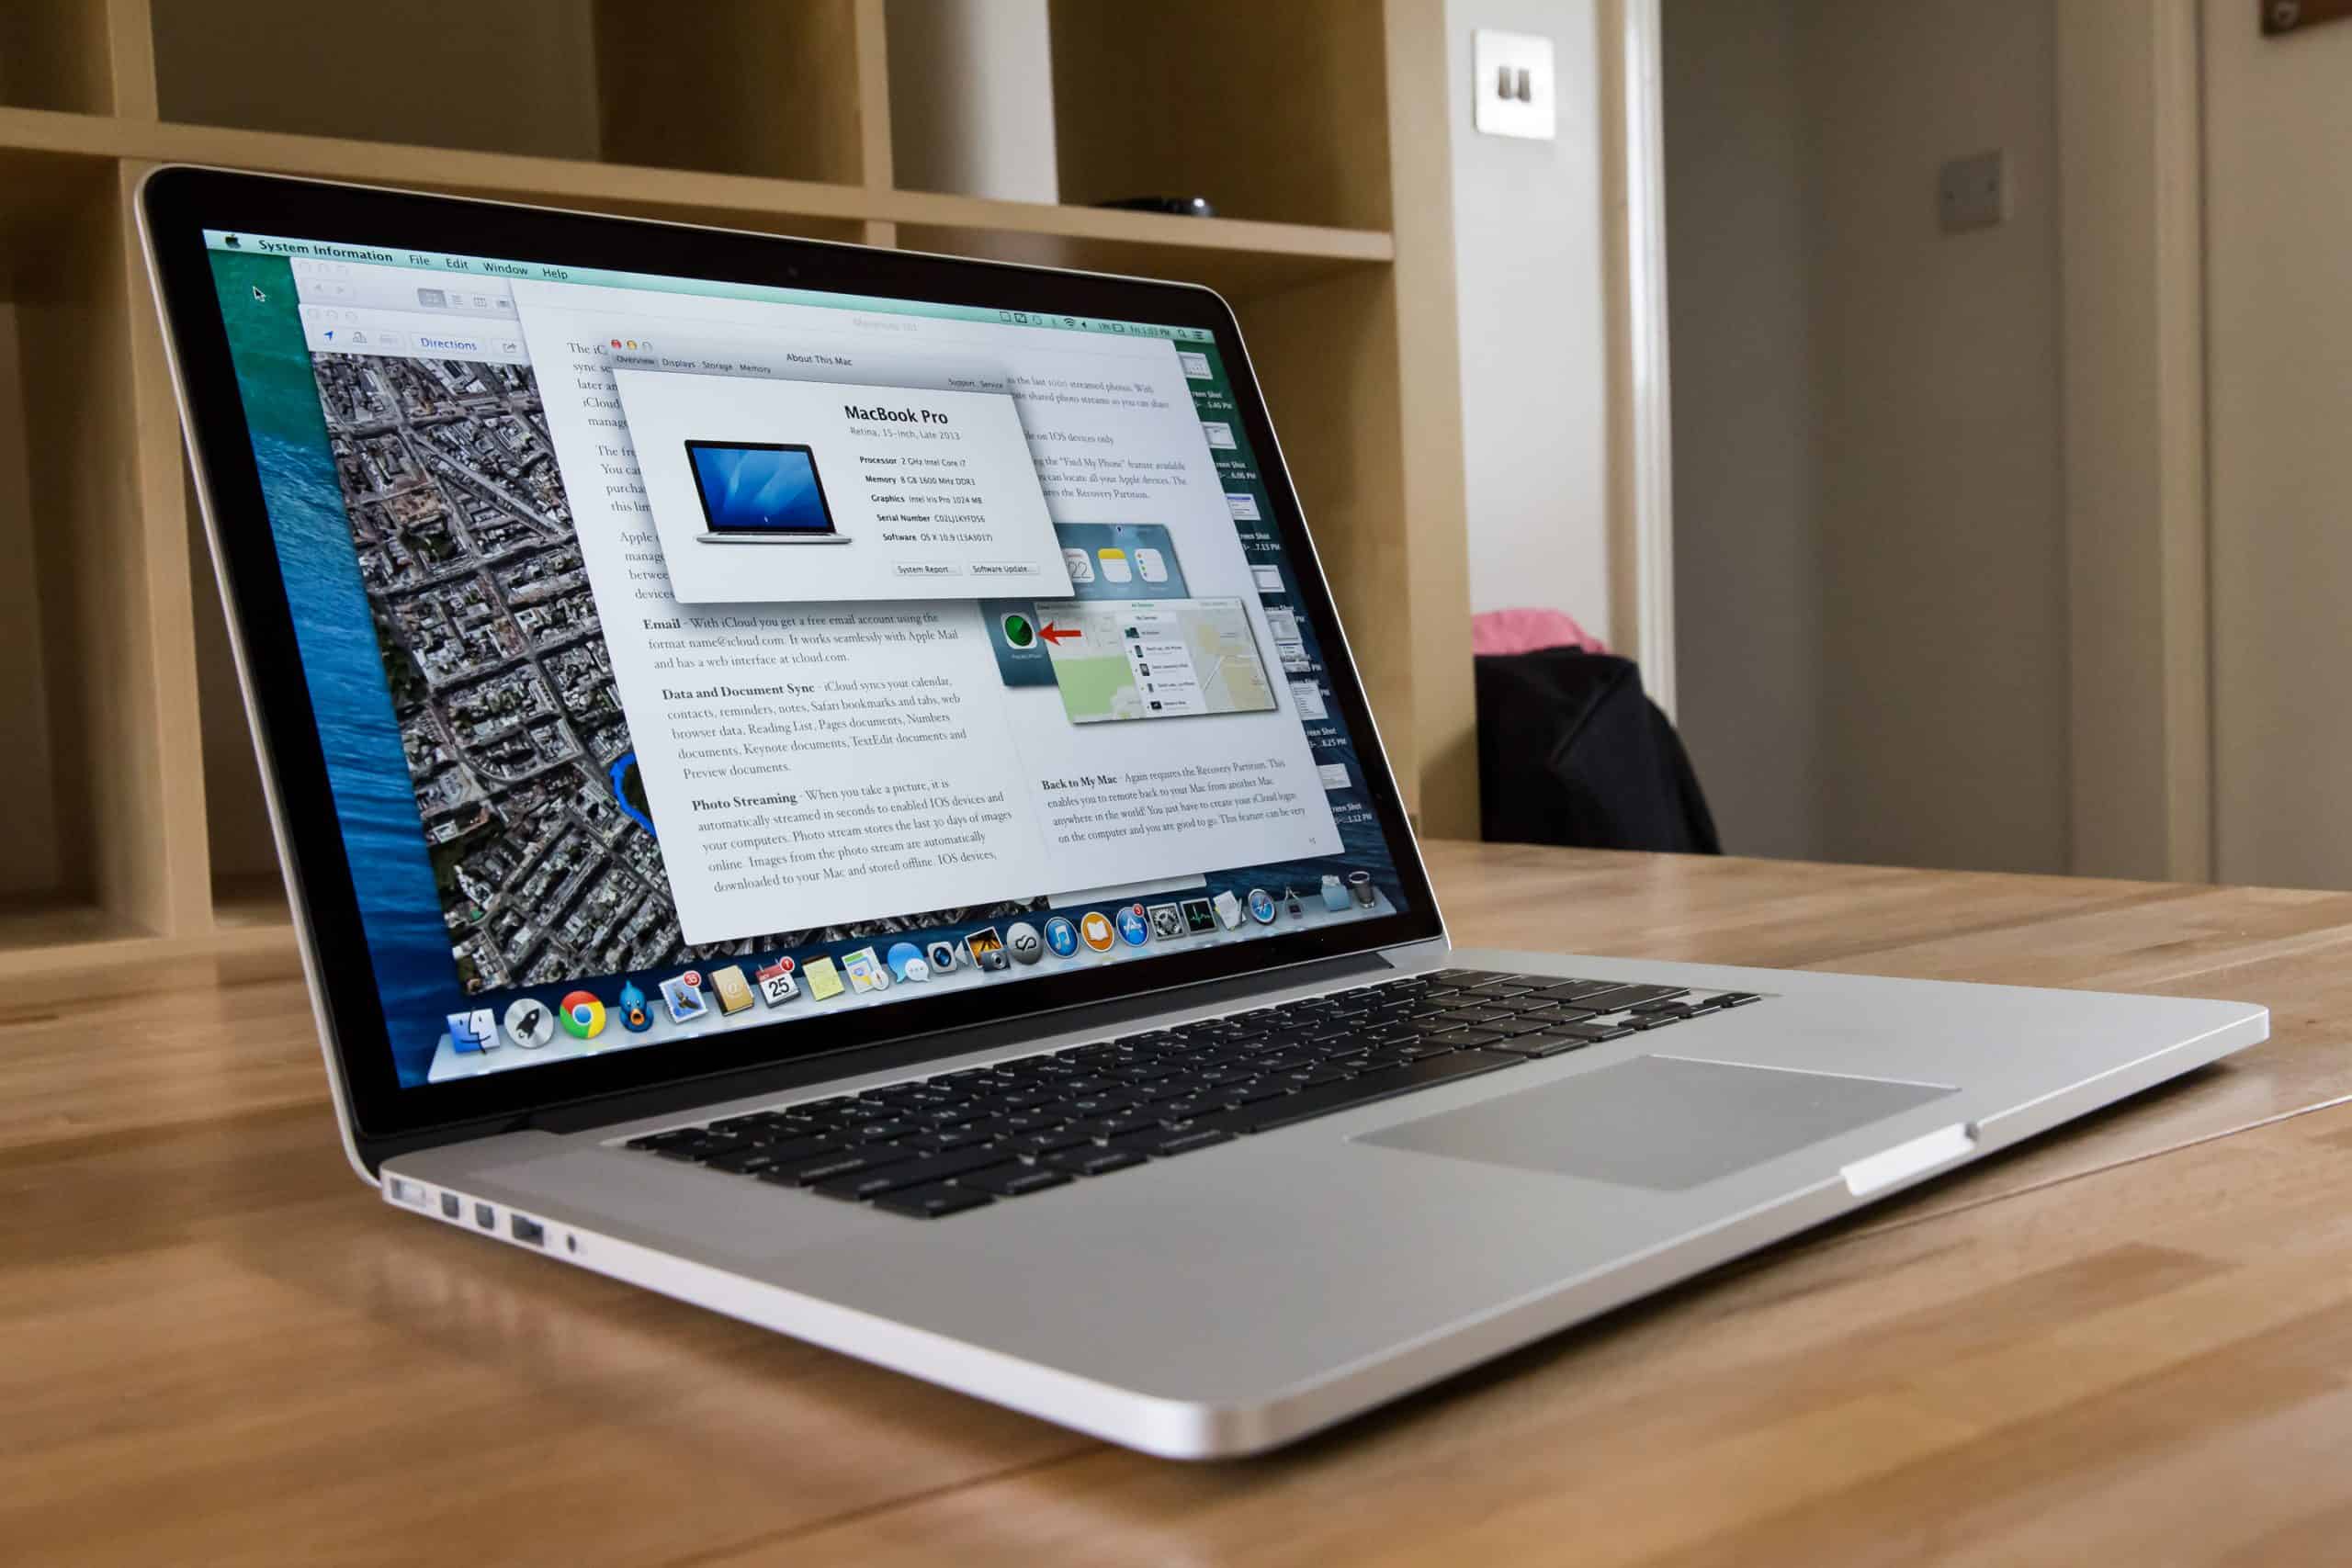 Apple Macbook Pro i7 15” Review